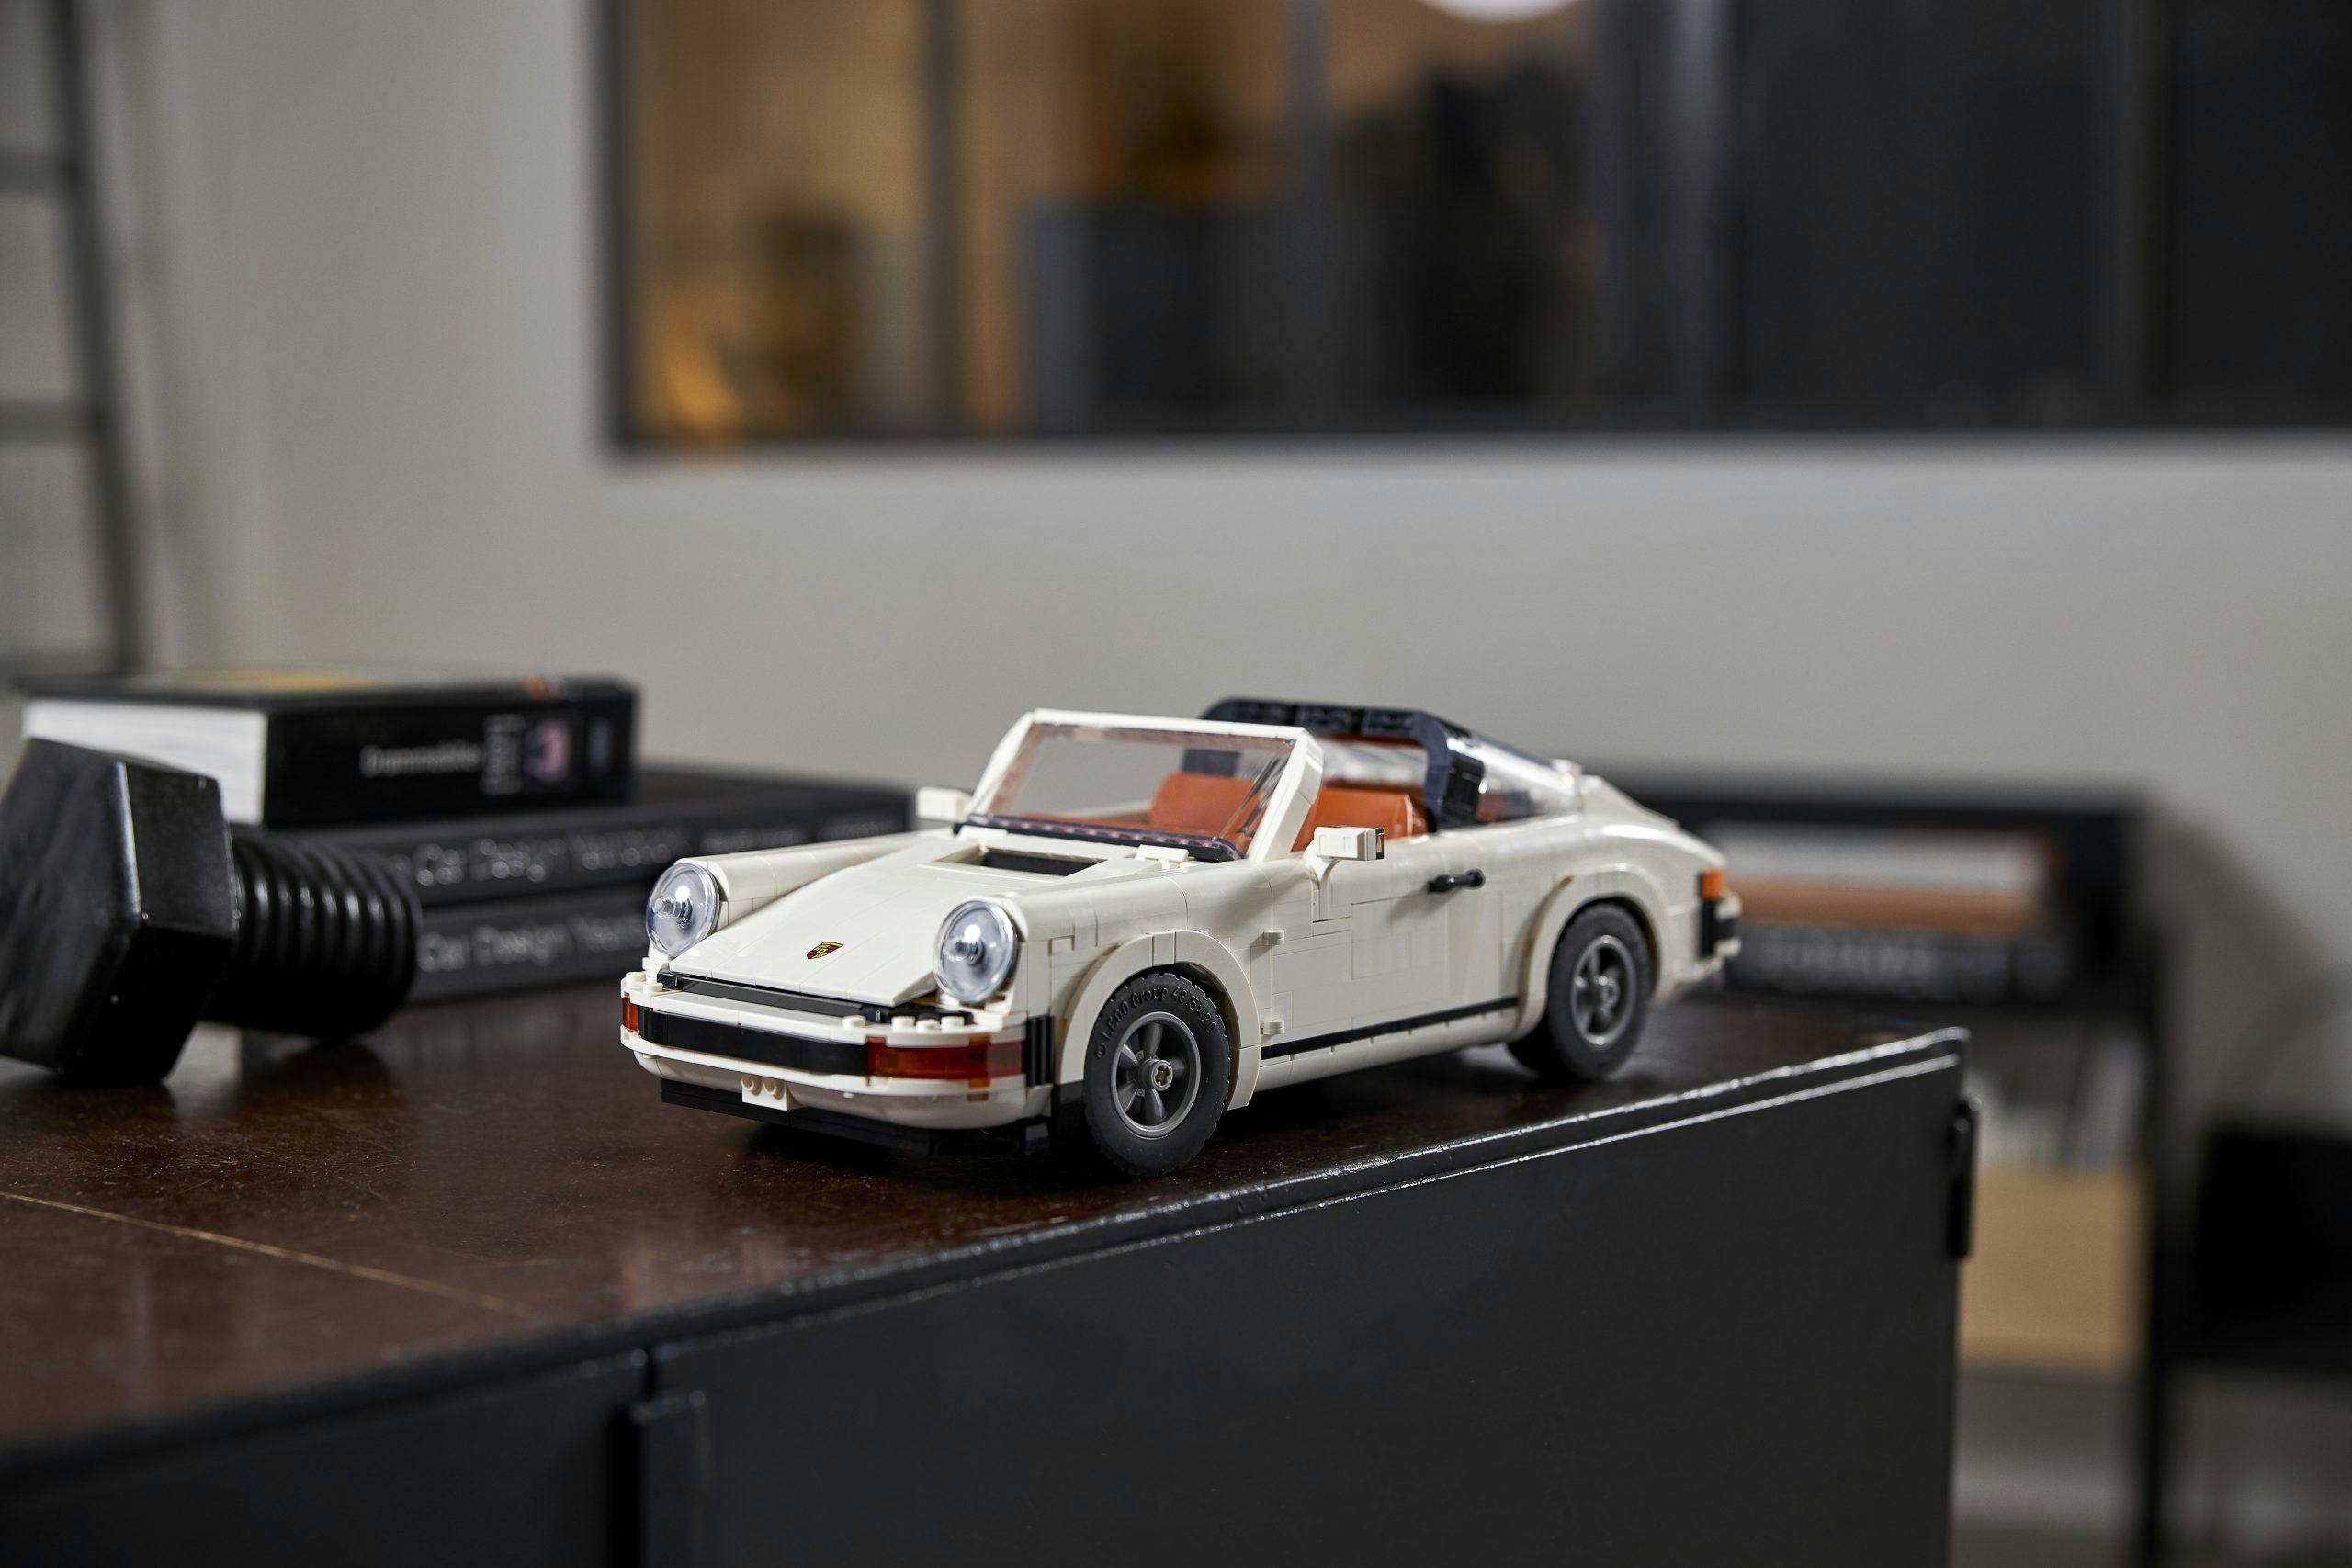 Lego Porsche 911 two-in-one set Targa desk